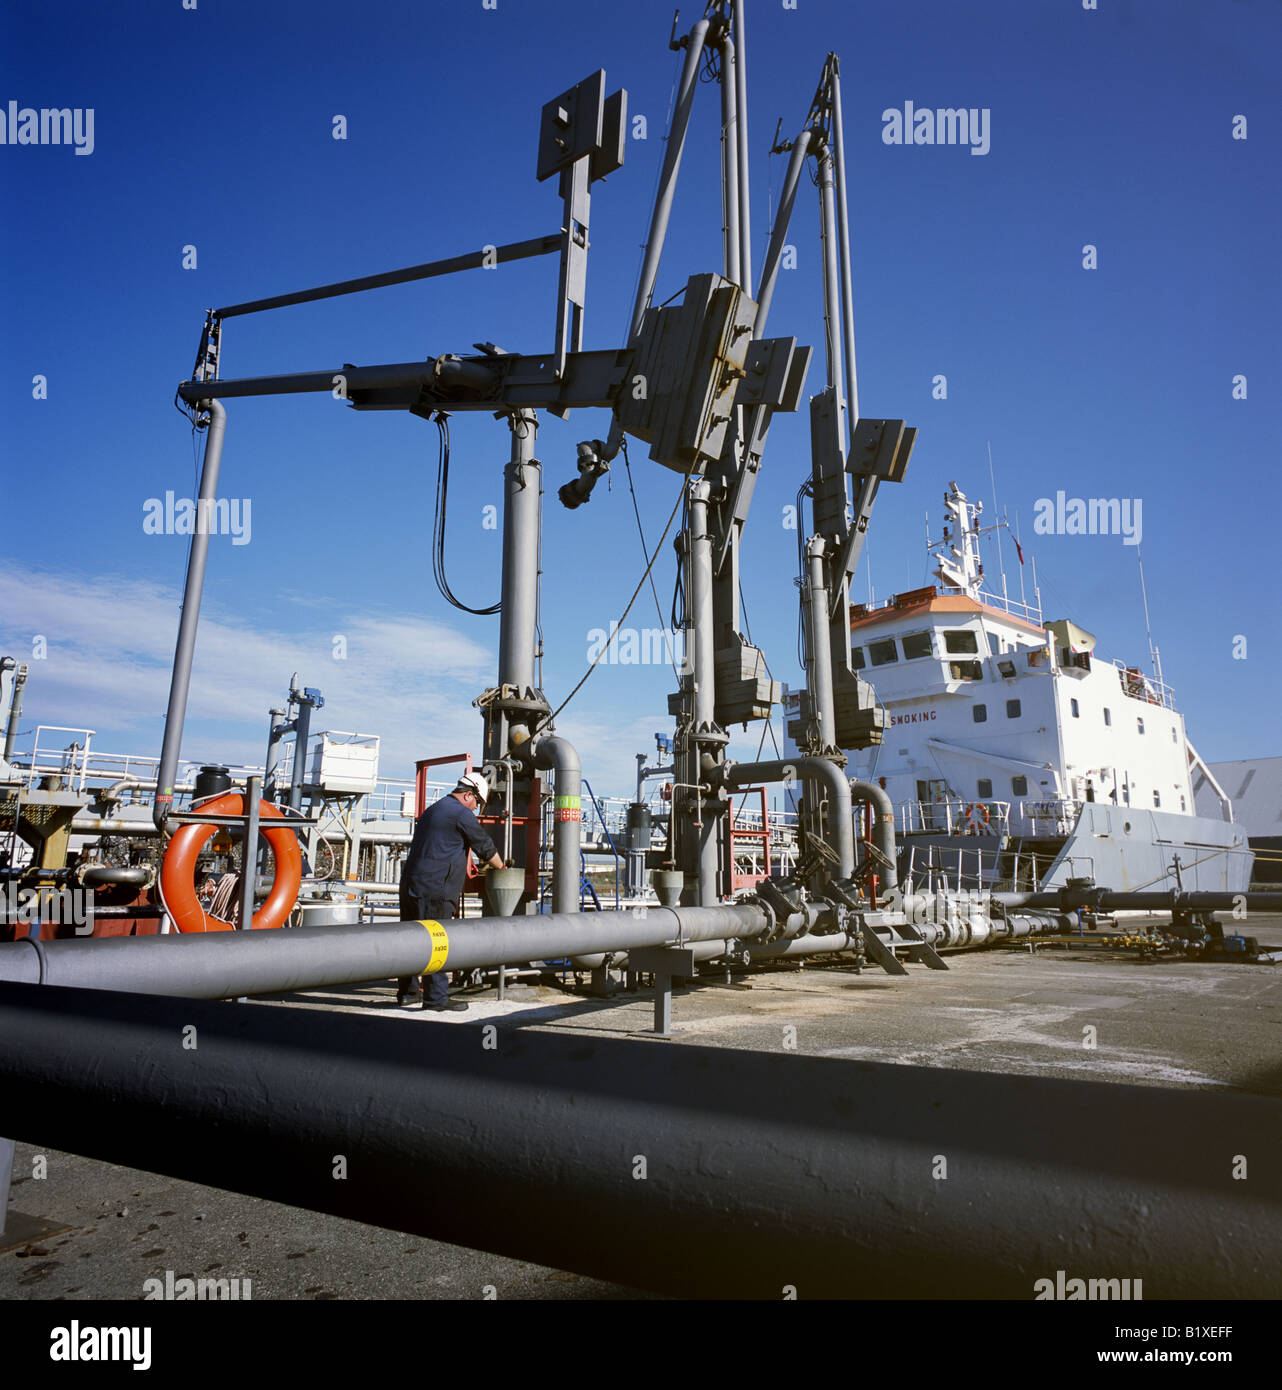 Dockside Facility for a Coastal Oil Tanker Stock Photo